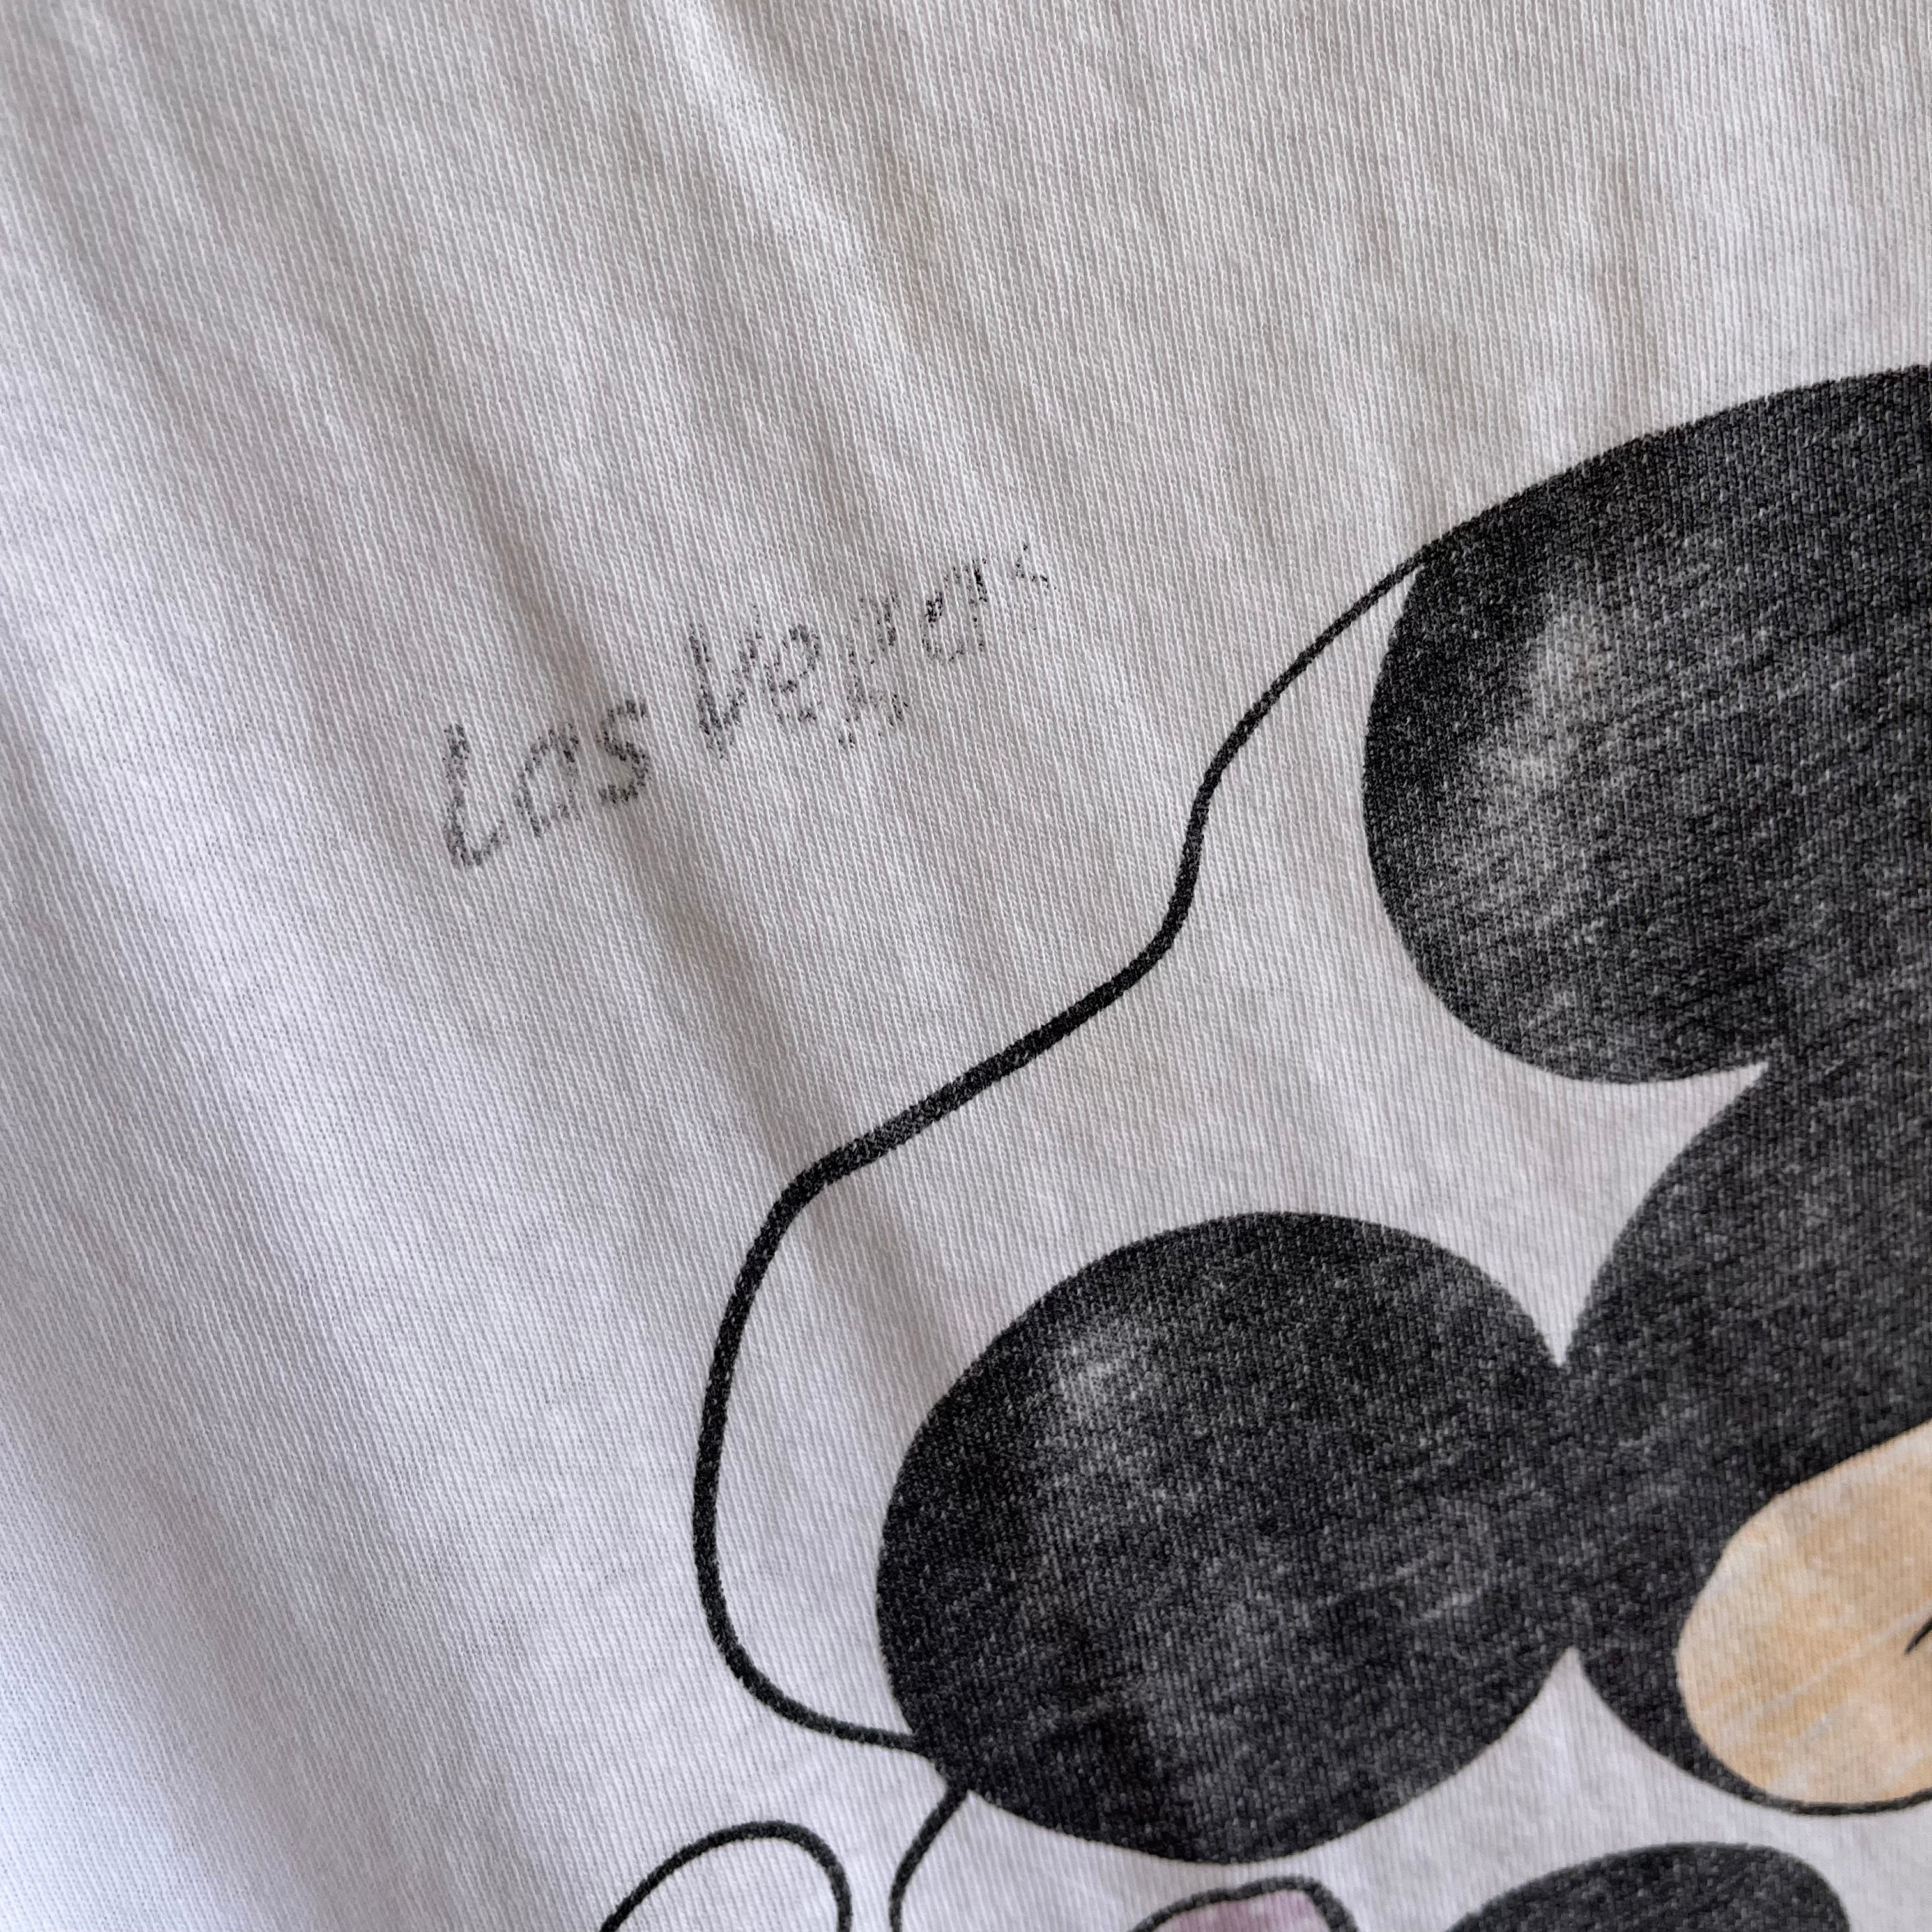 1990s Mickey With Mending Las Vegas T-Shirt